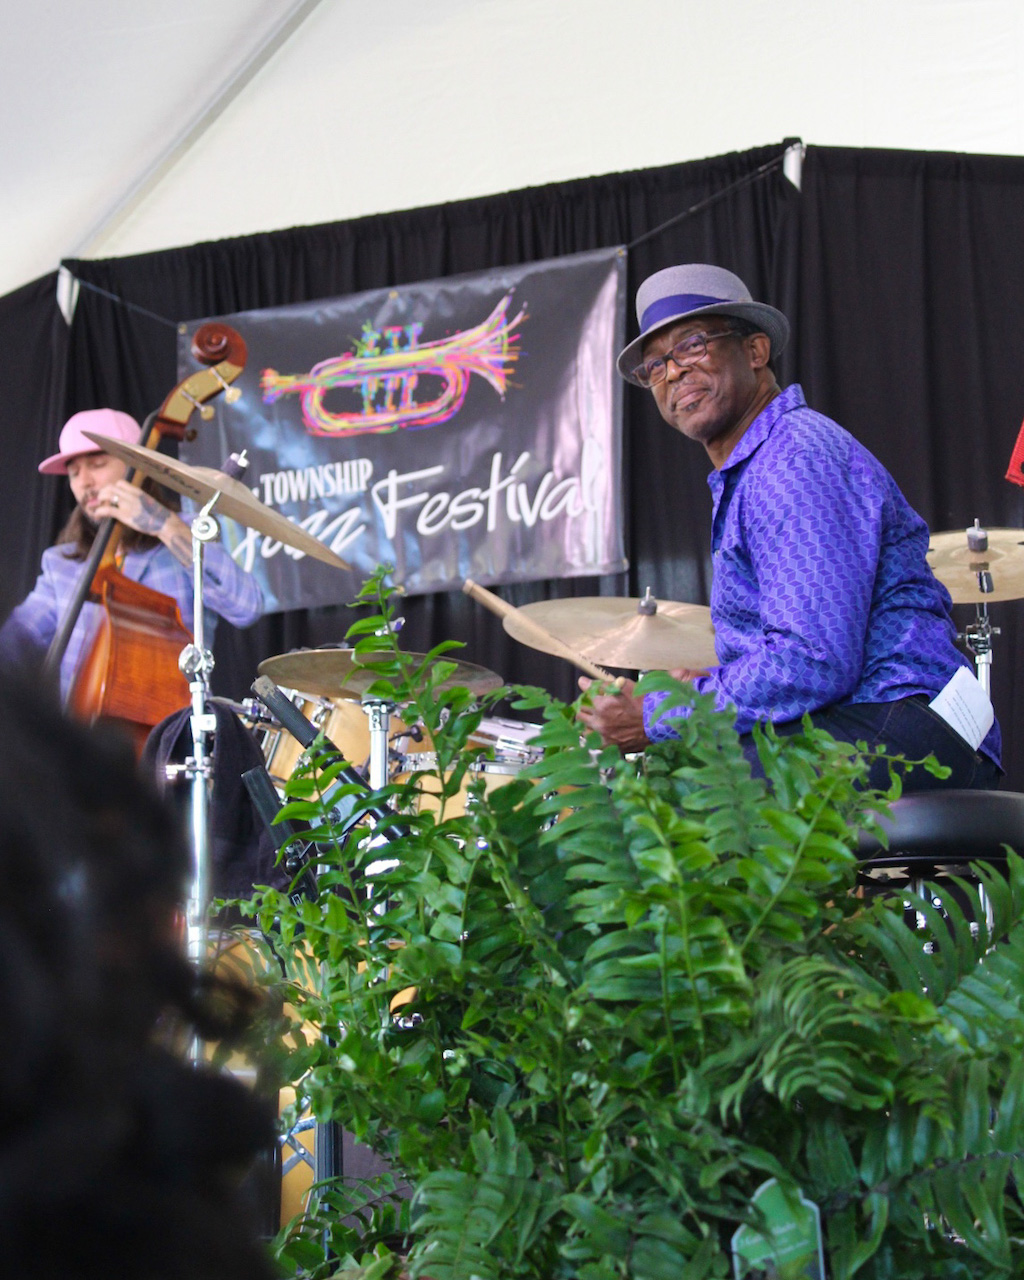 Musicians perform at Township Jazz Fest in Ridgeland, Mississippi